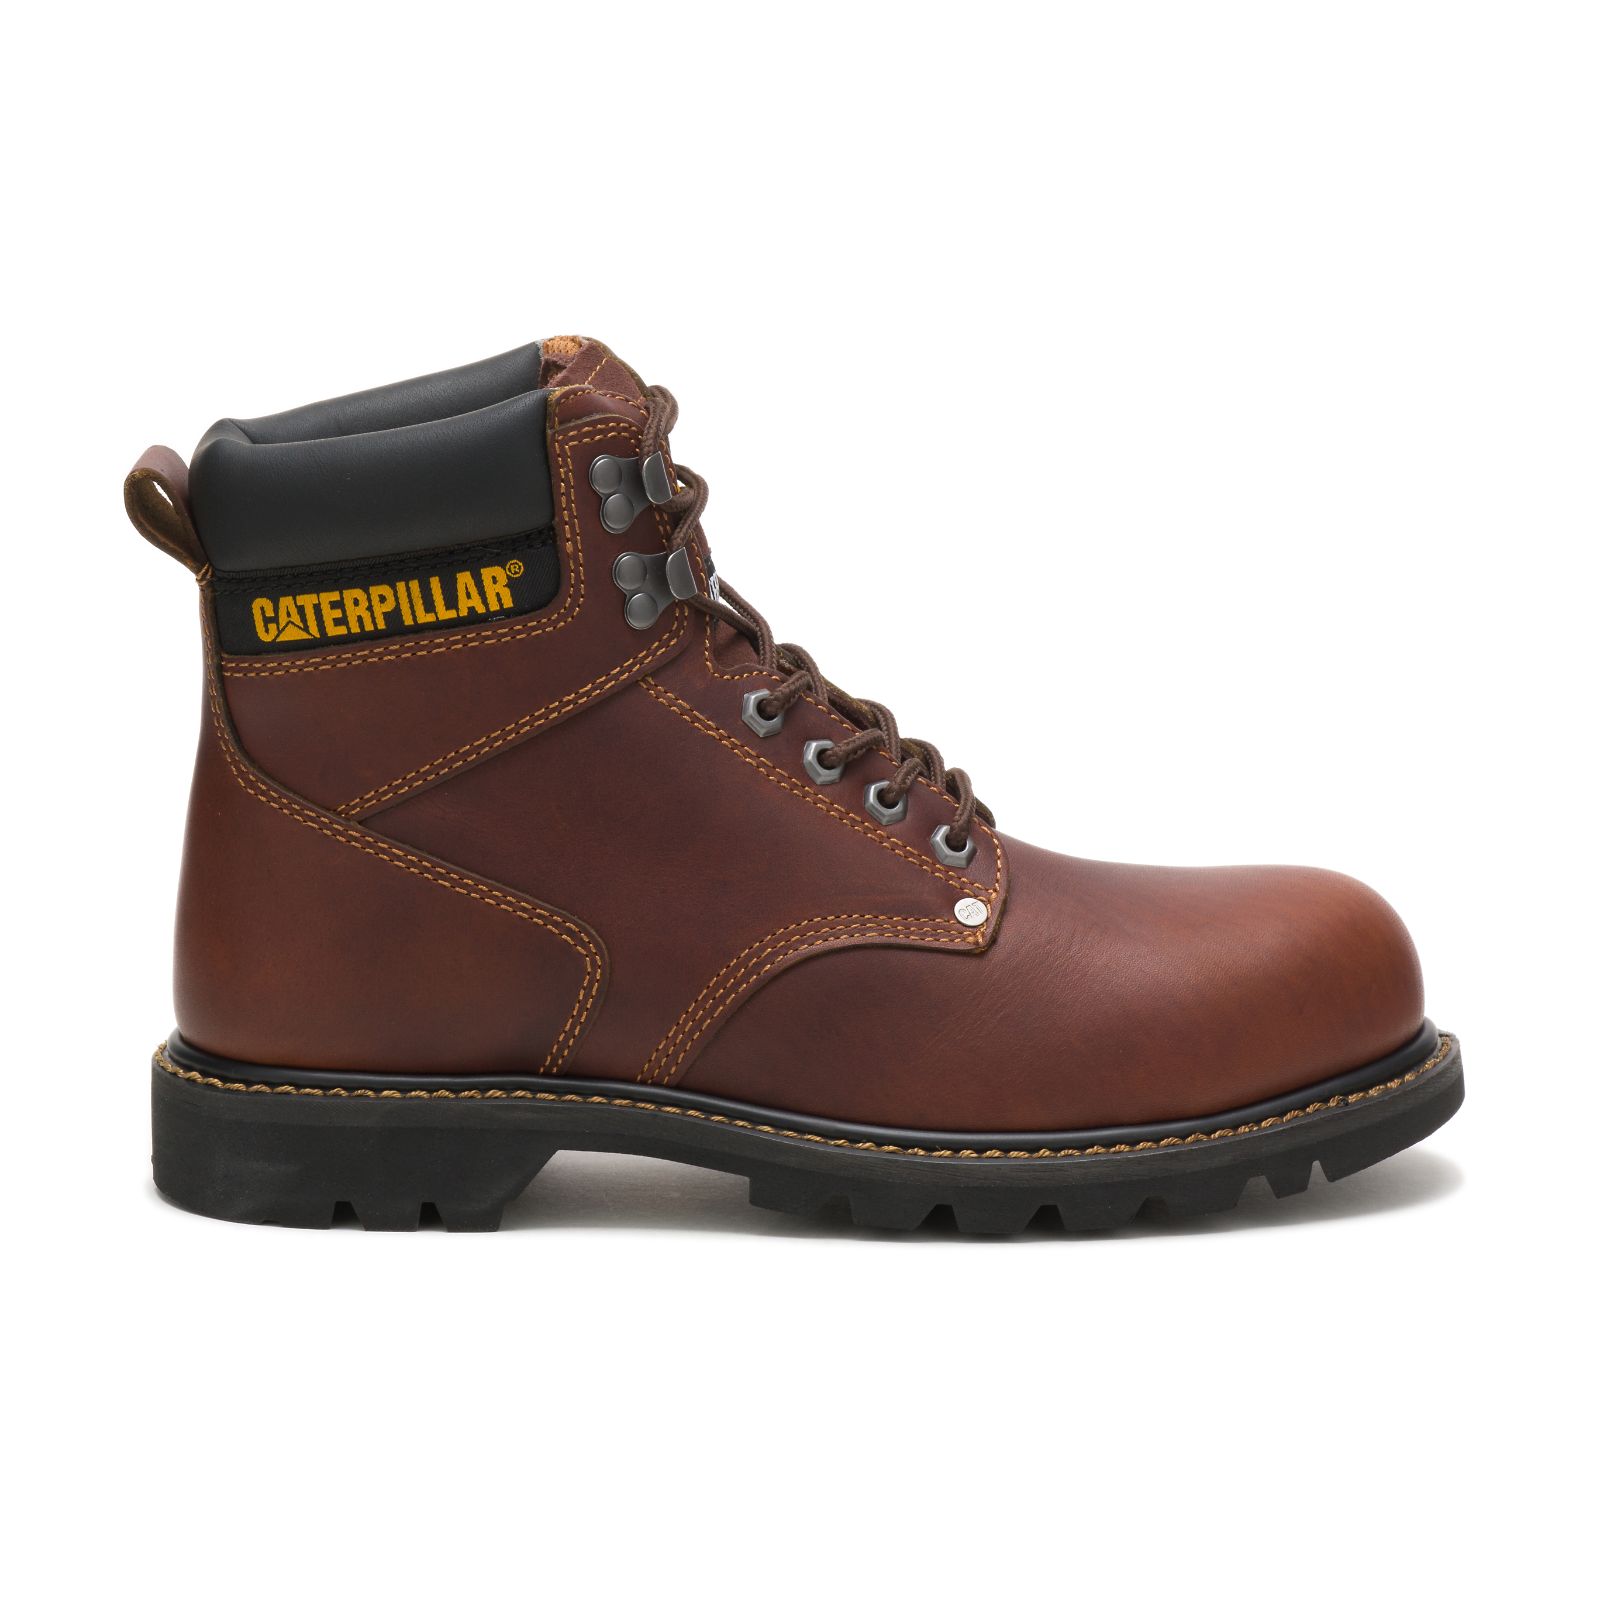 Caterpillar Steel Toe Boots UAE Online - Caterpillar Second Shift Steel Toe Mens - Brown KUAHVZ067